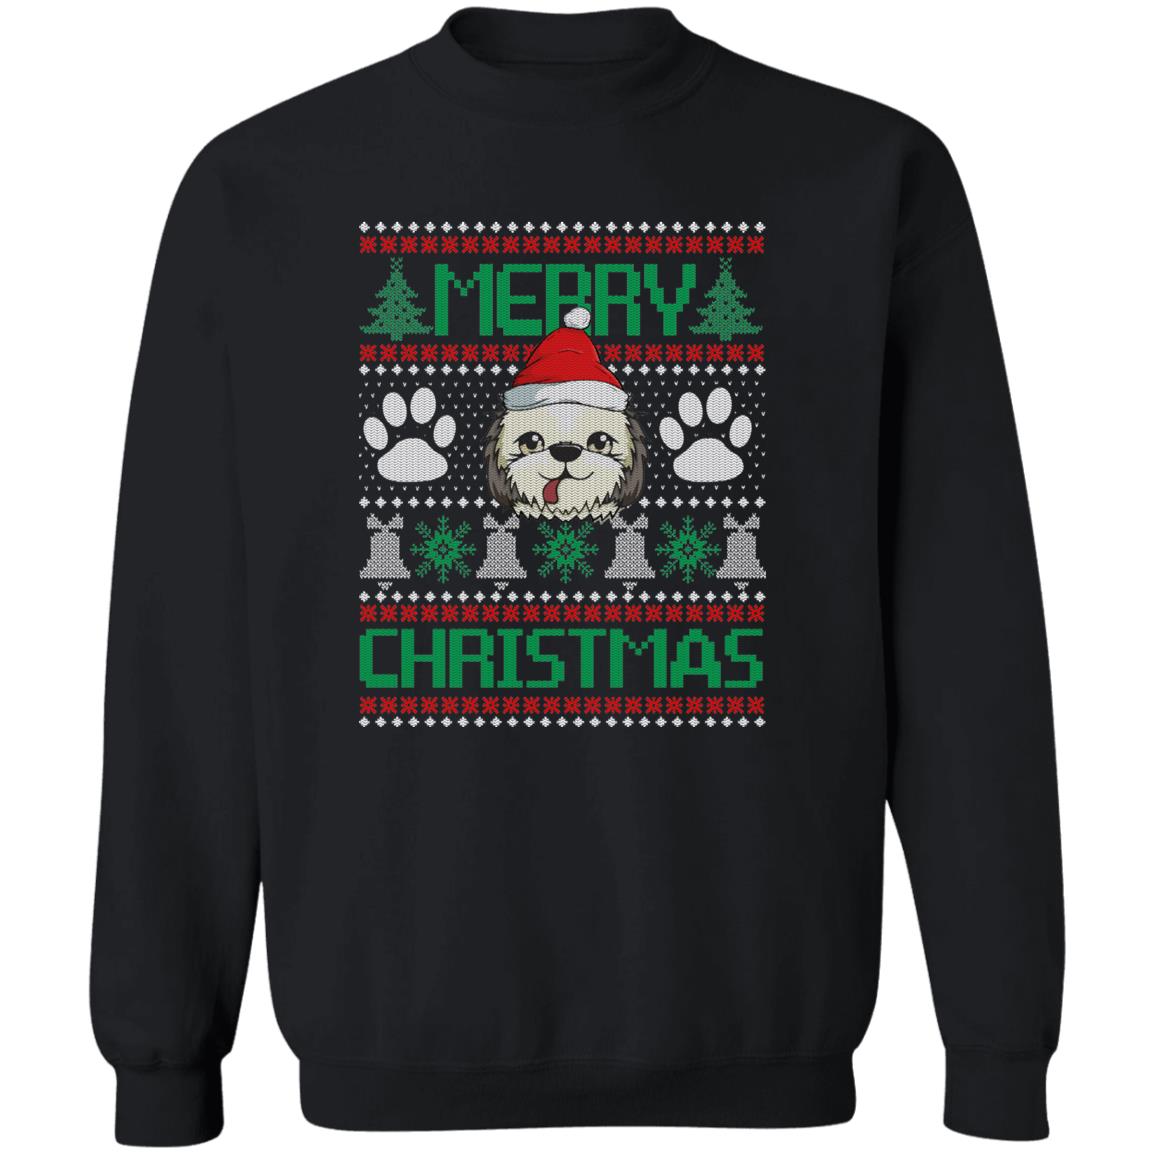 Dog owner Christmas Unisex Sweatshirt Ugly sweater Black Dark Heather-Family-Gift-Planet